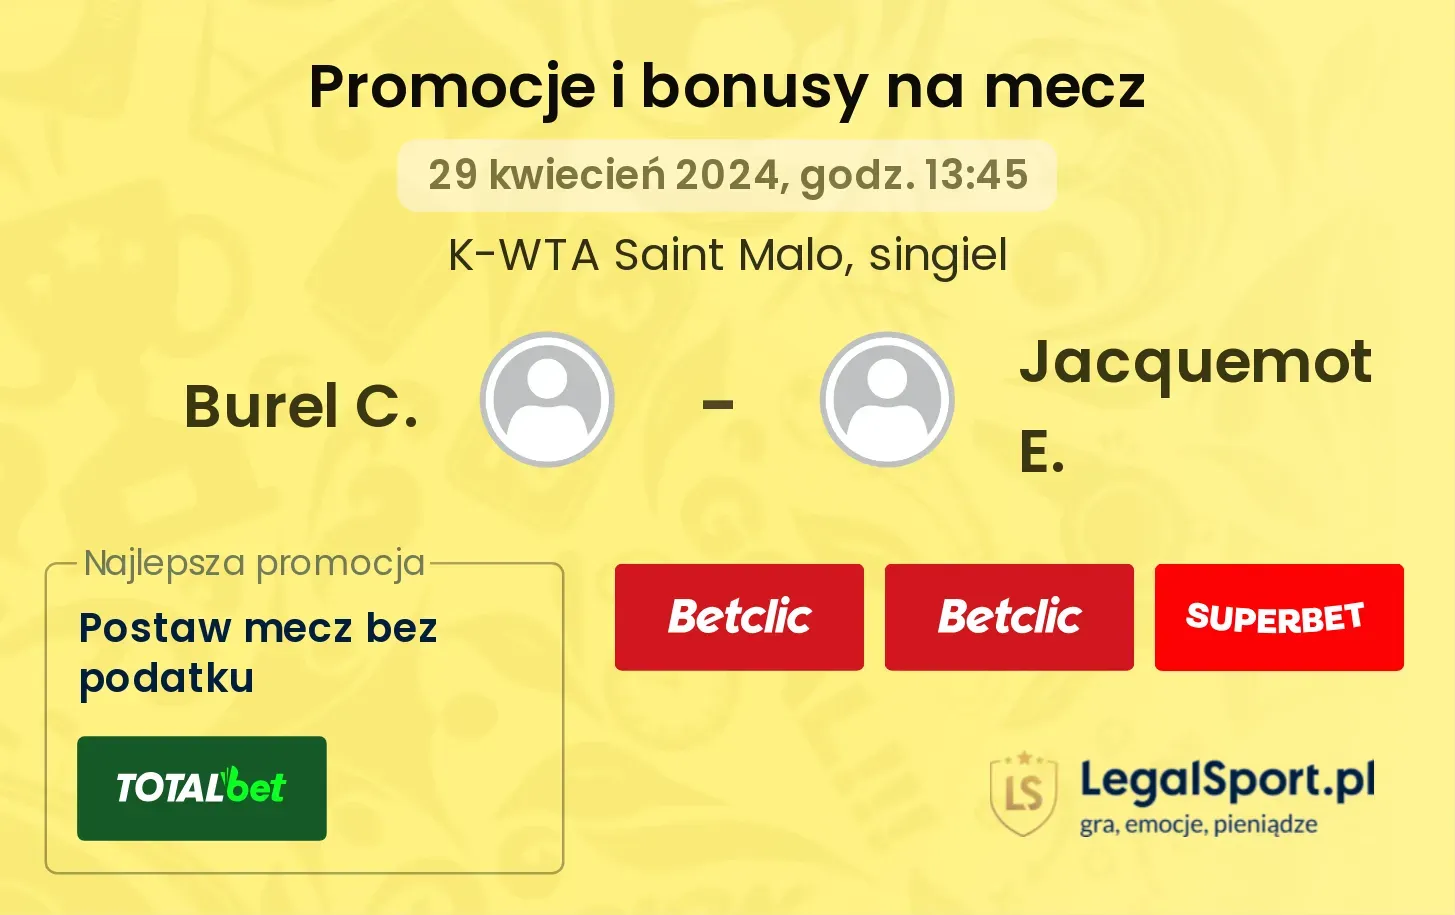 Burel C. - Jacquemot E. promocje bonusy na mecz